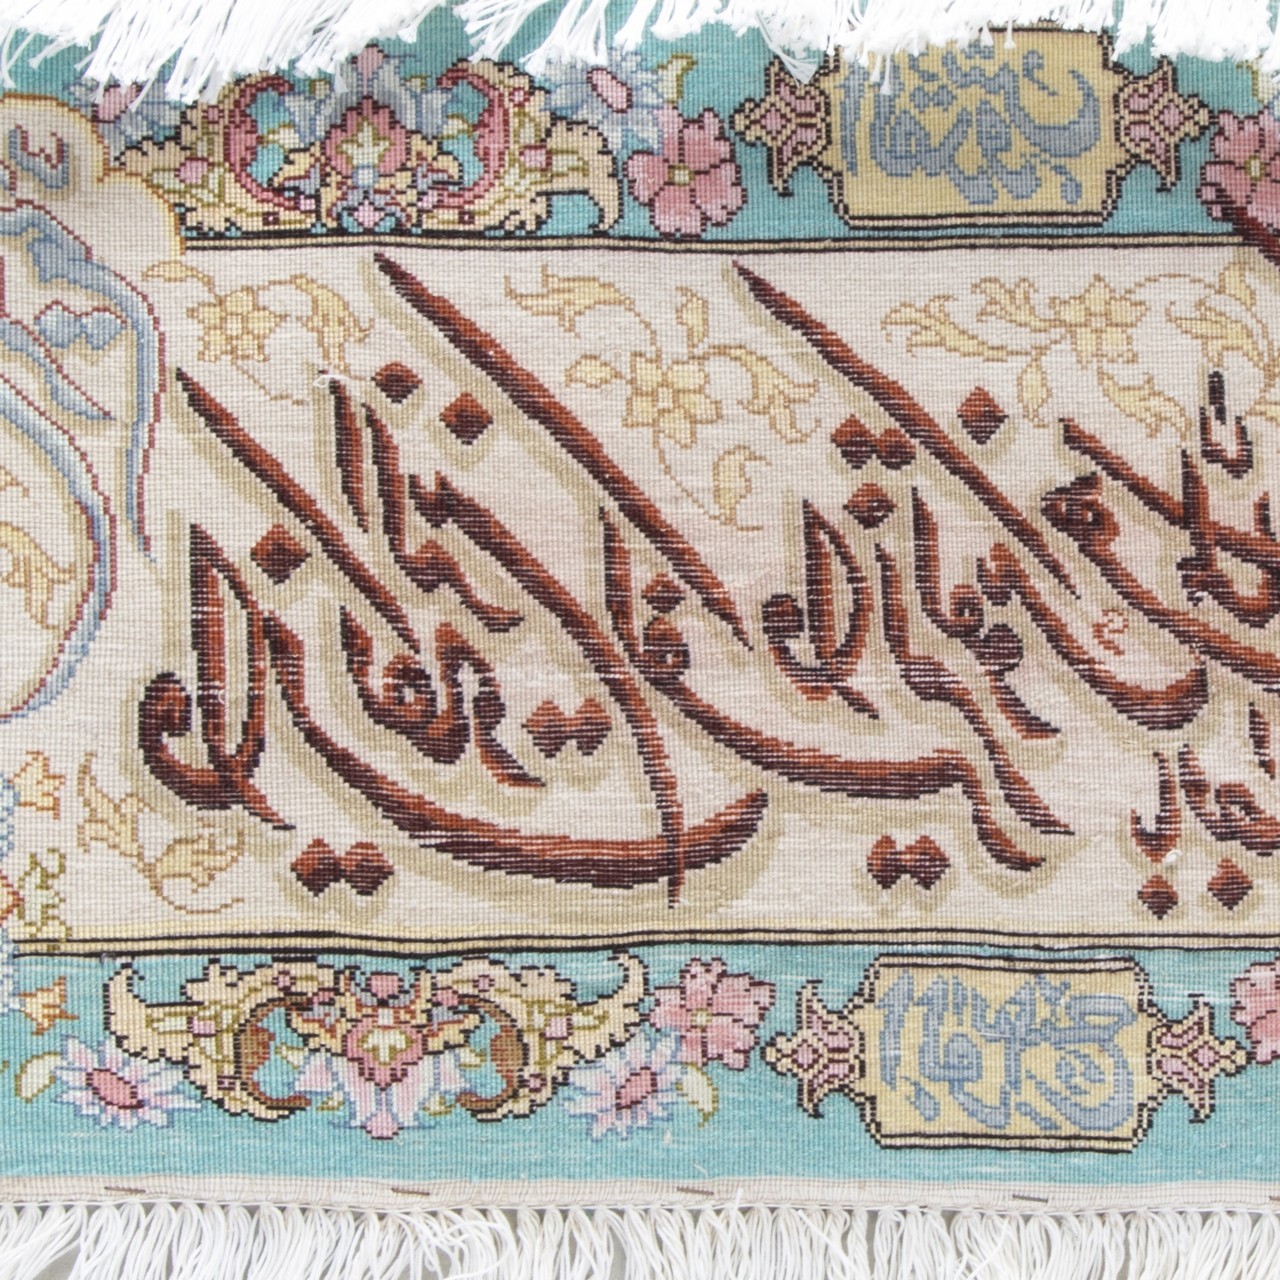 Pictorial Tabriz Carpet Ref: 901400